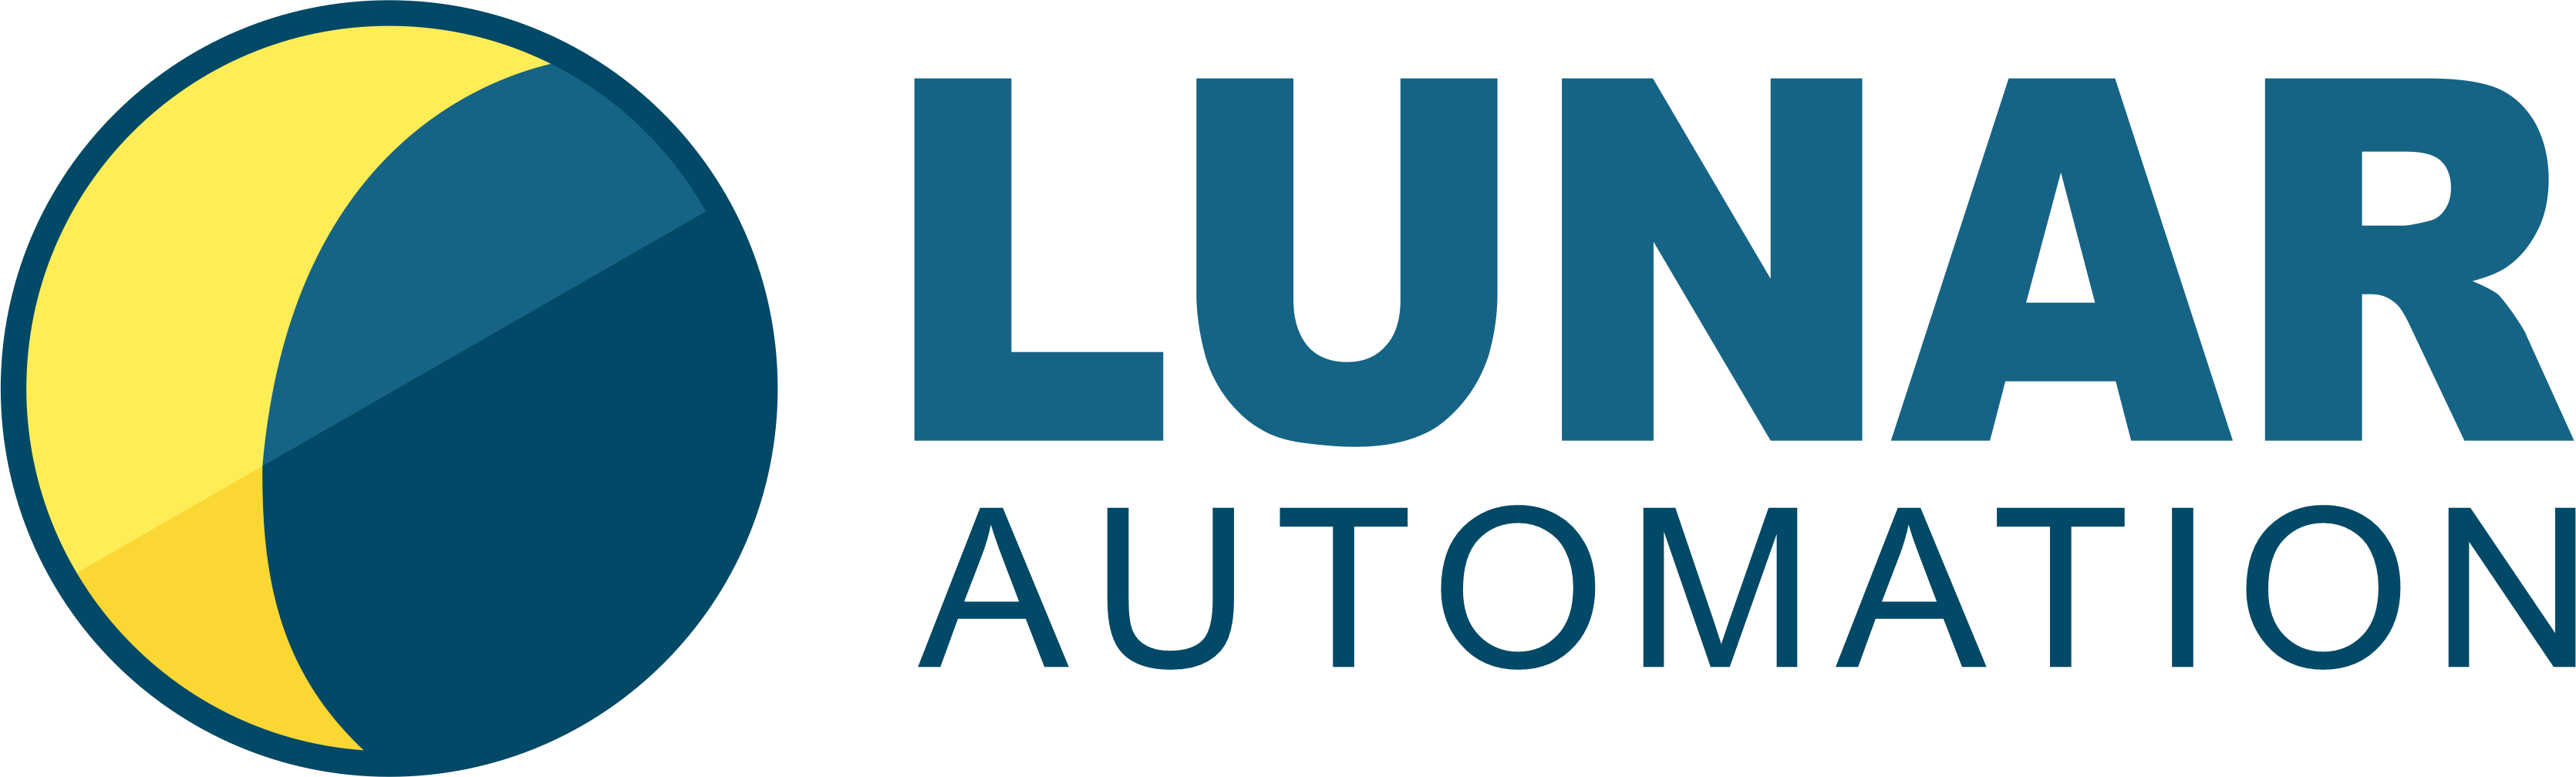 Lunar-Automation